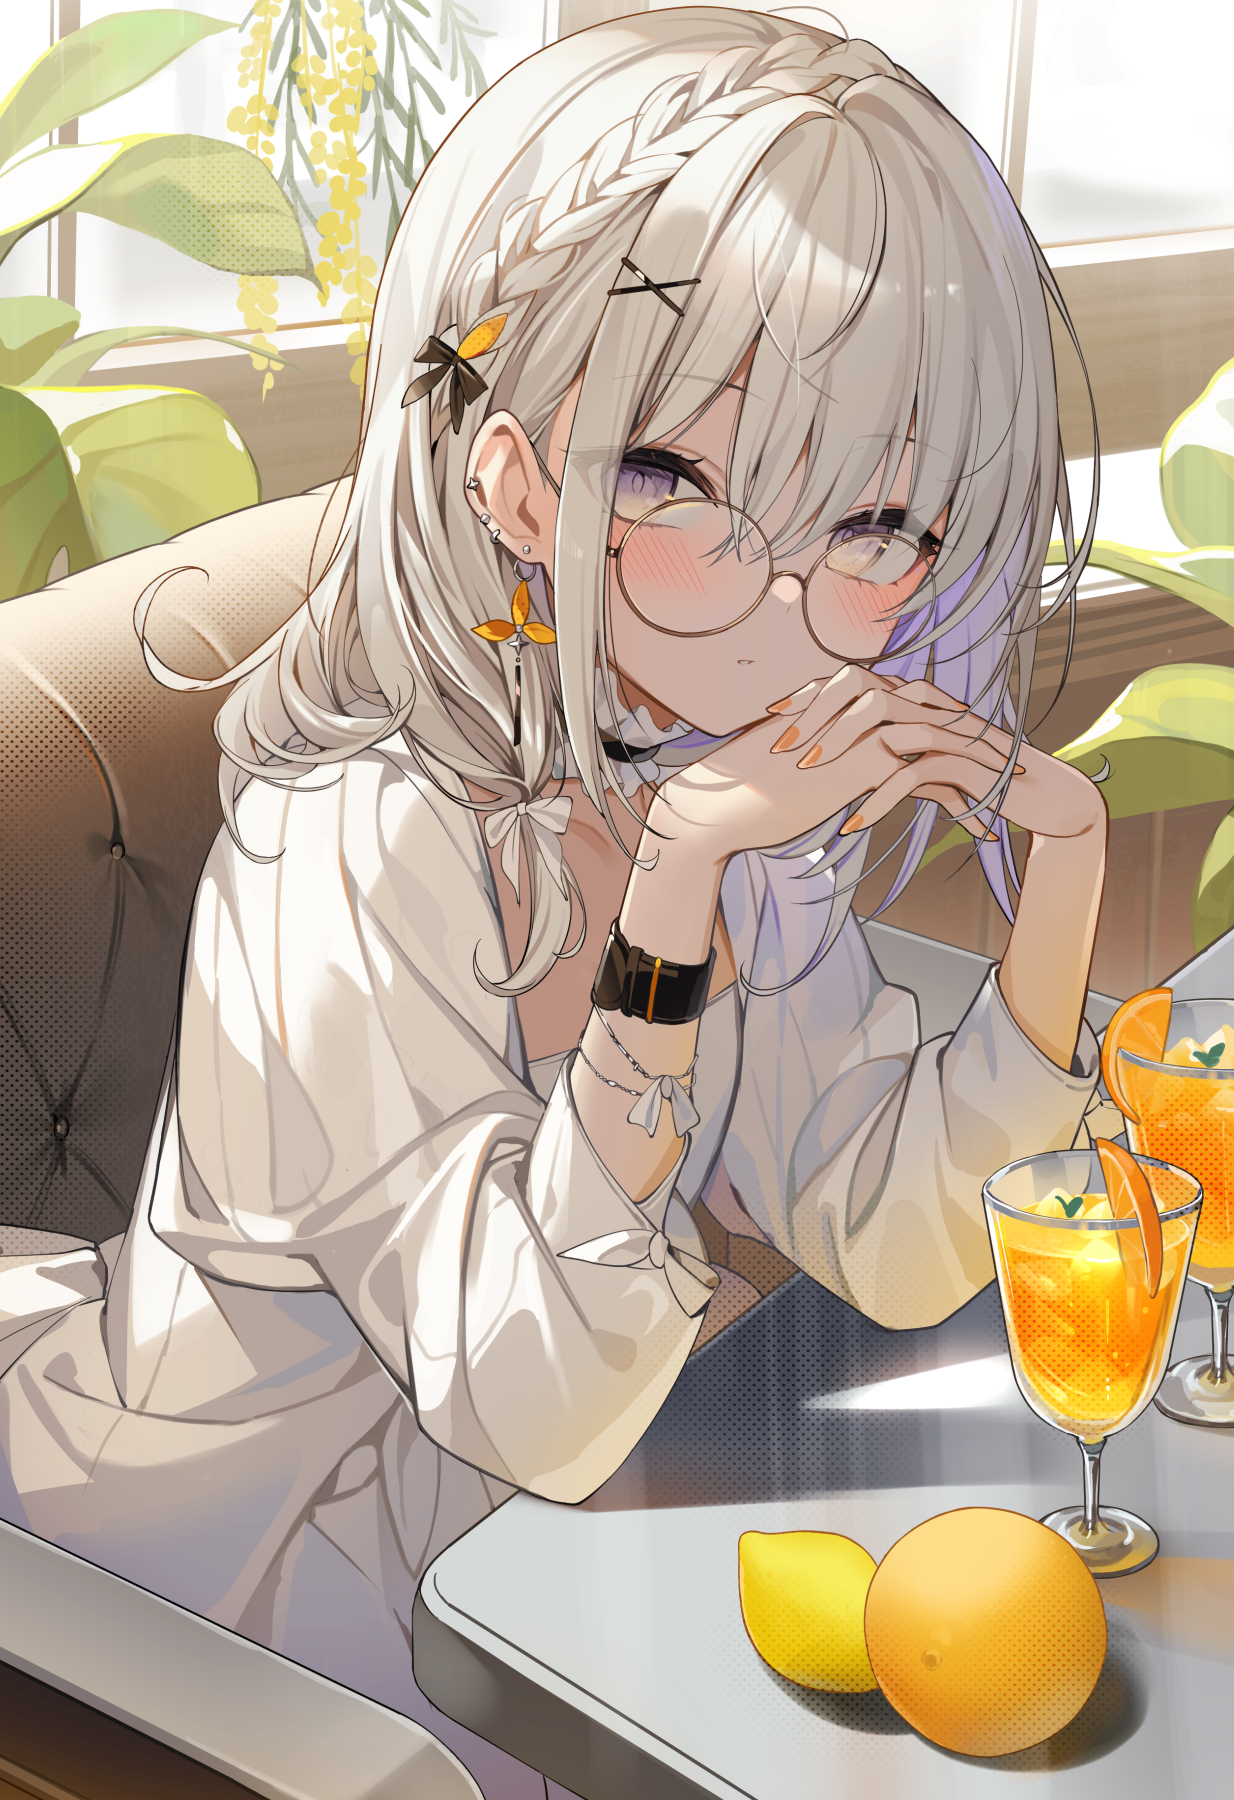 Anime 1234x1800 anime anime girls digital art artwork 2D Pixiv looking at viewer glasses portrait display long hair drink fruit leaves choker blushing earring braids orange (fruit)